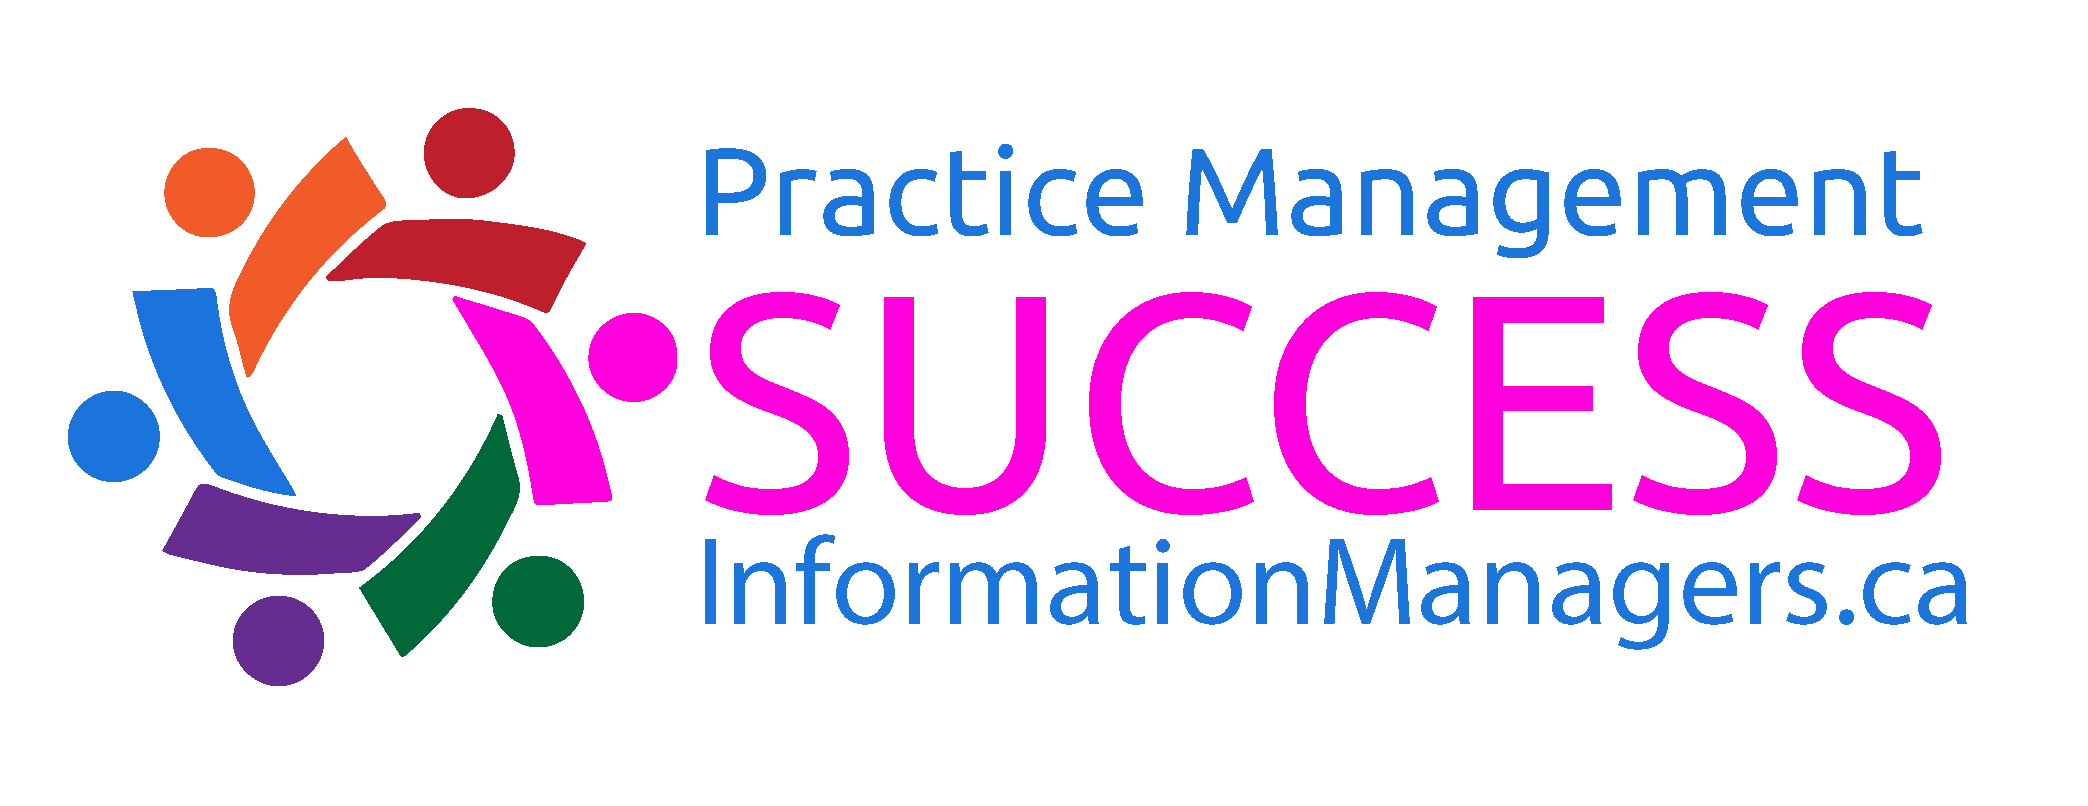 Practice Management Success informatonmanagers.ca